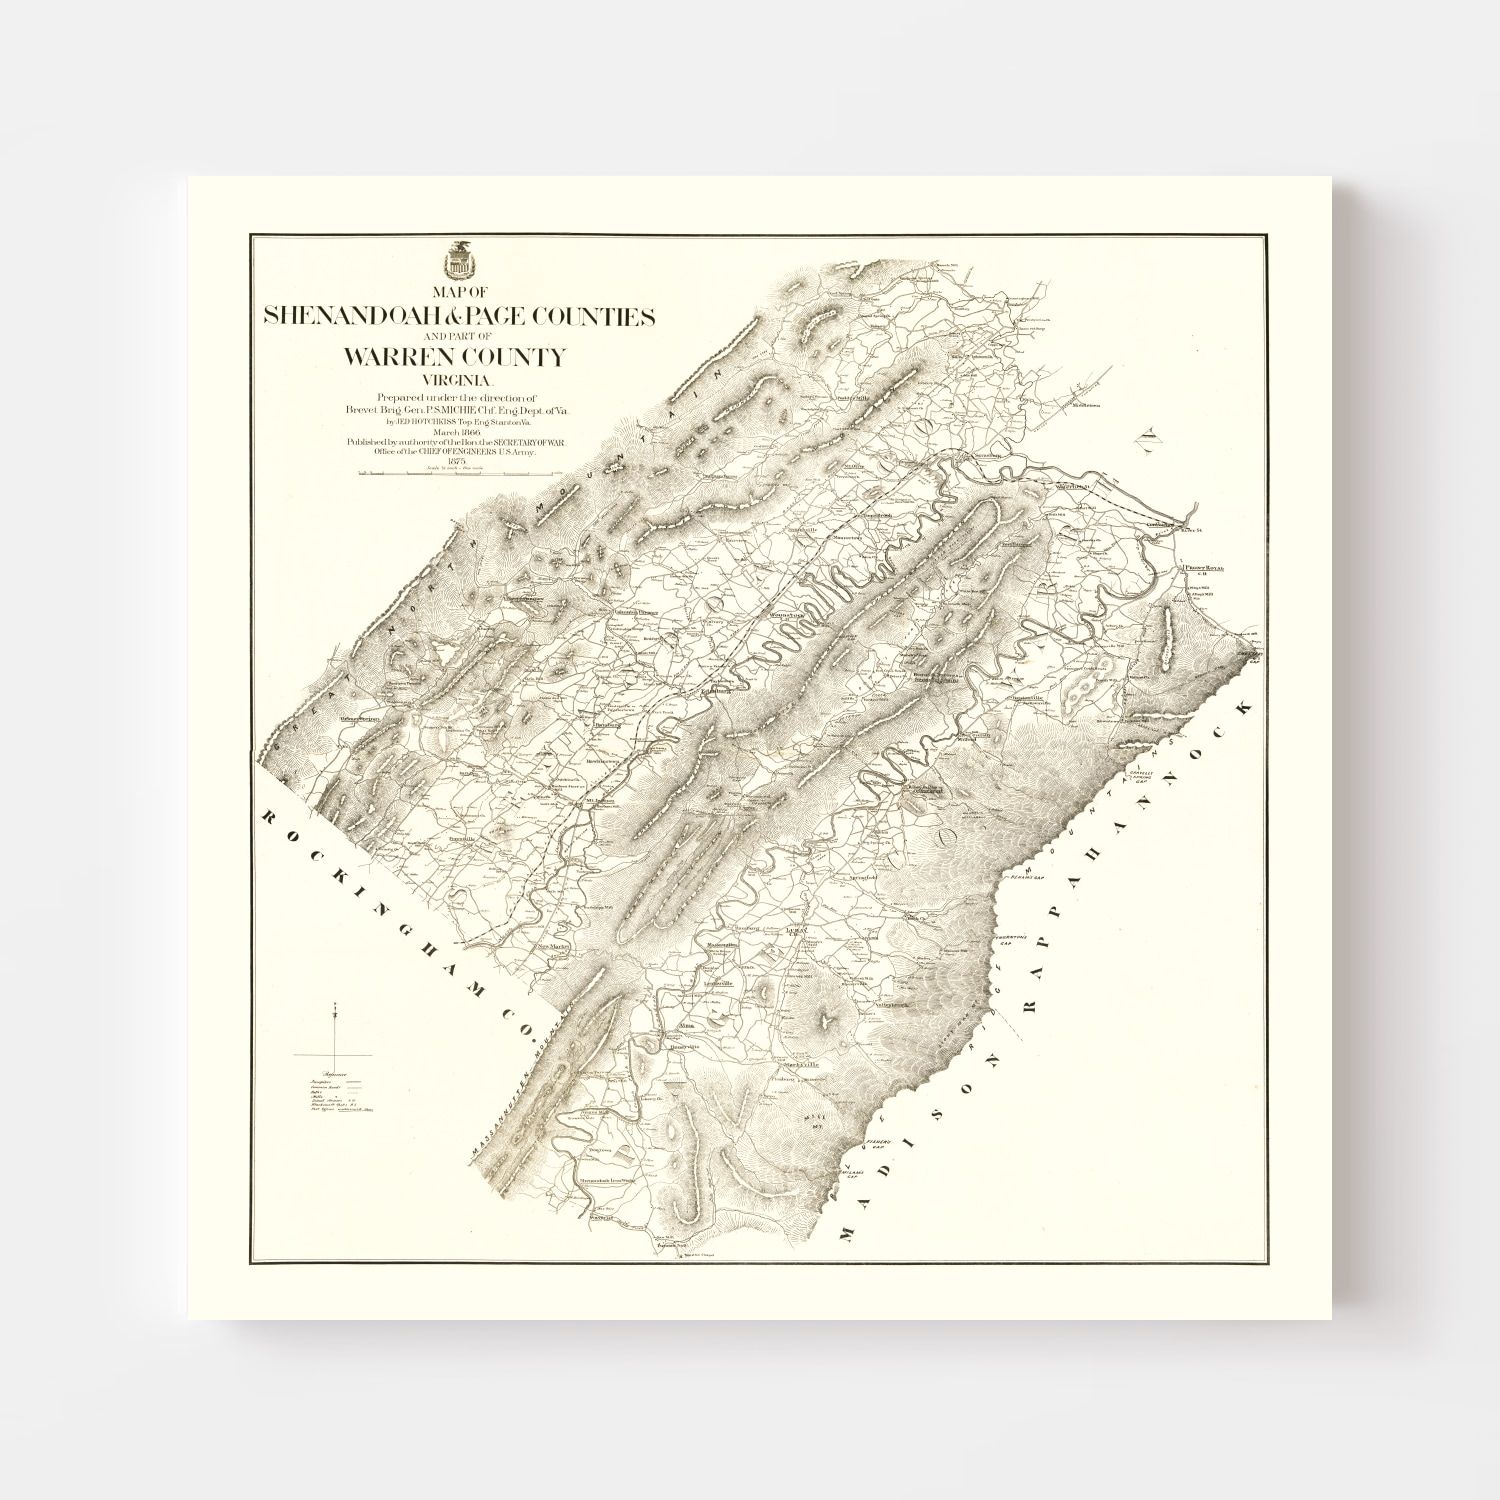 Vintage Map of Shenandoah & Page County, Virginia 1875